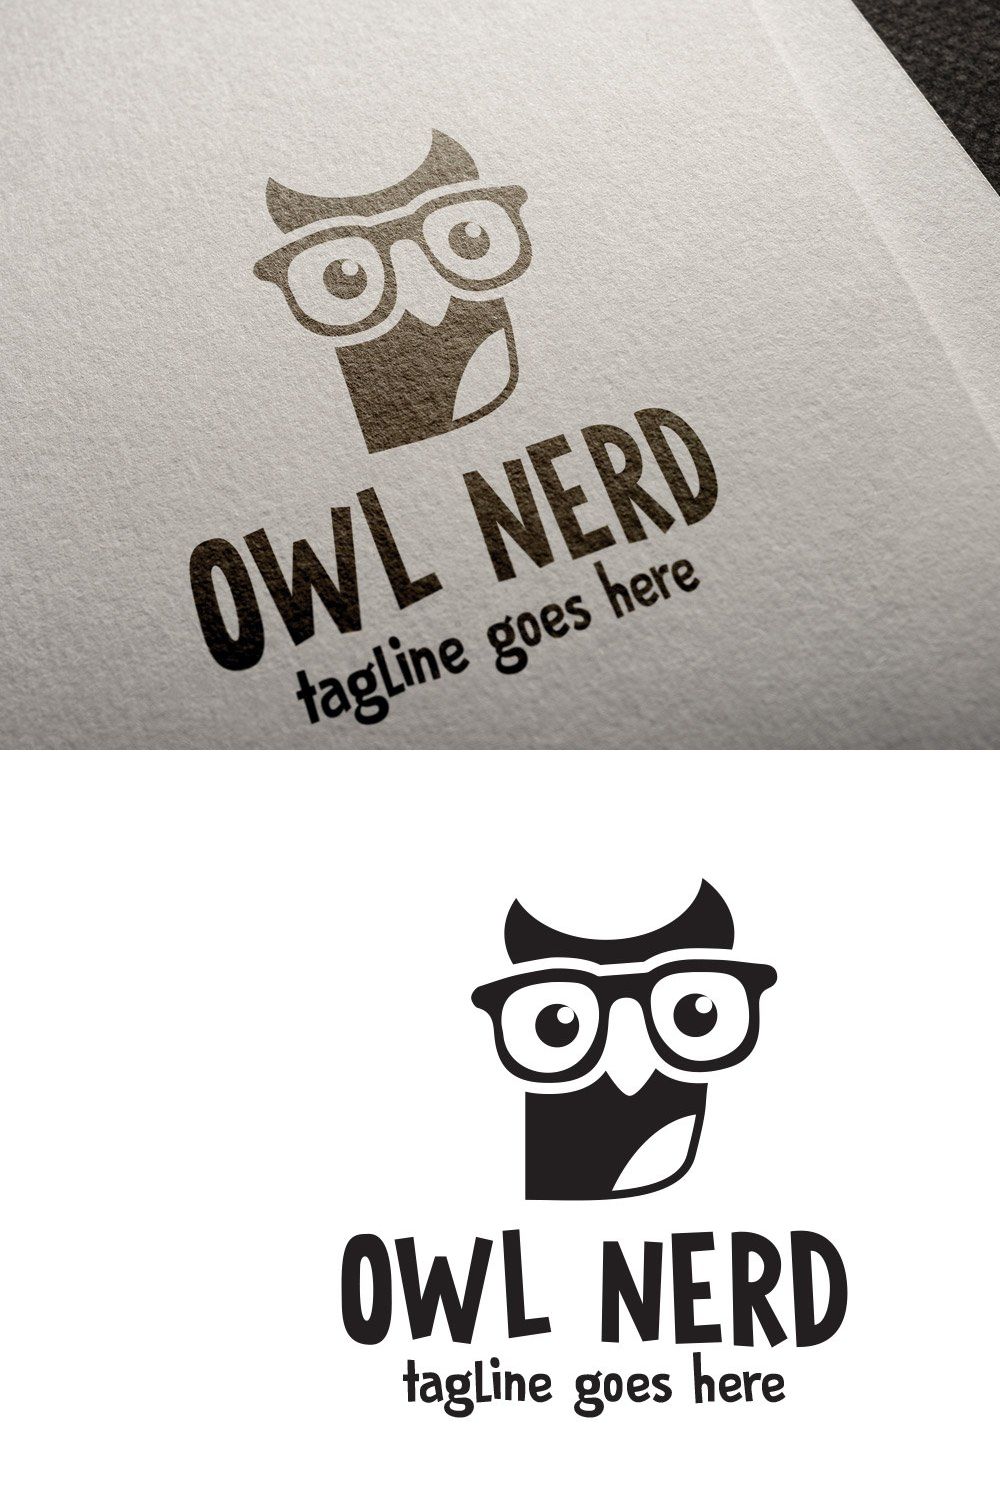 Owl Nerd pinterest preview image.